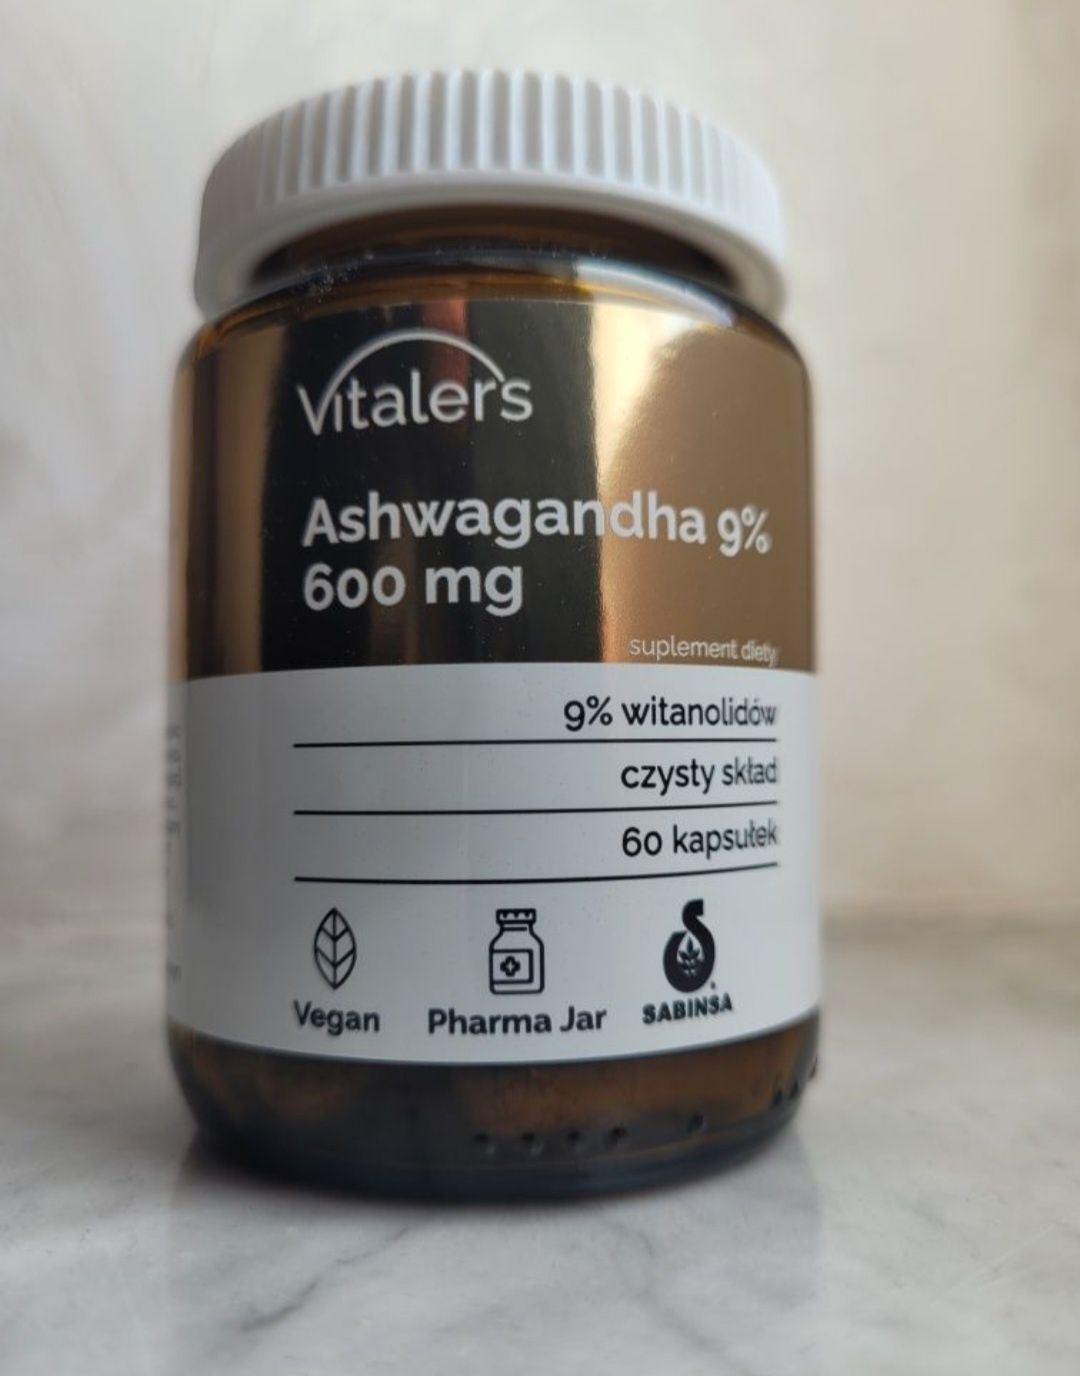 Vitalers Ashwagandha 9% 600 mg